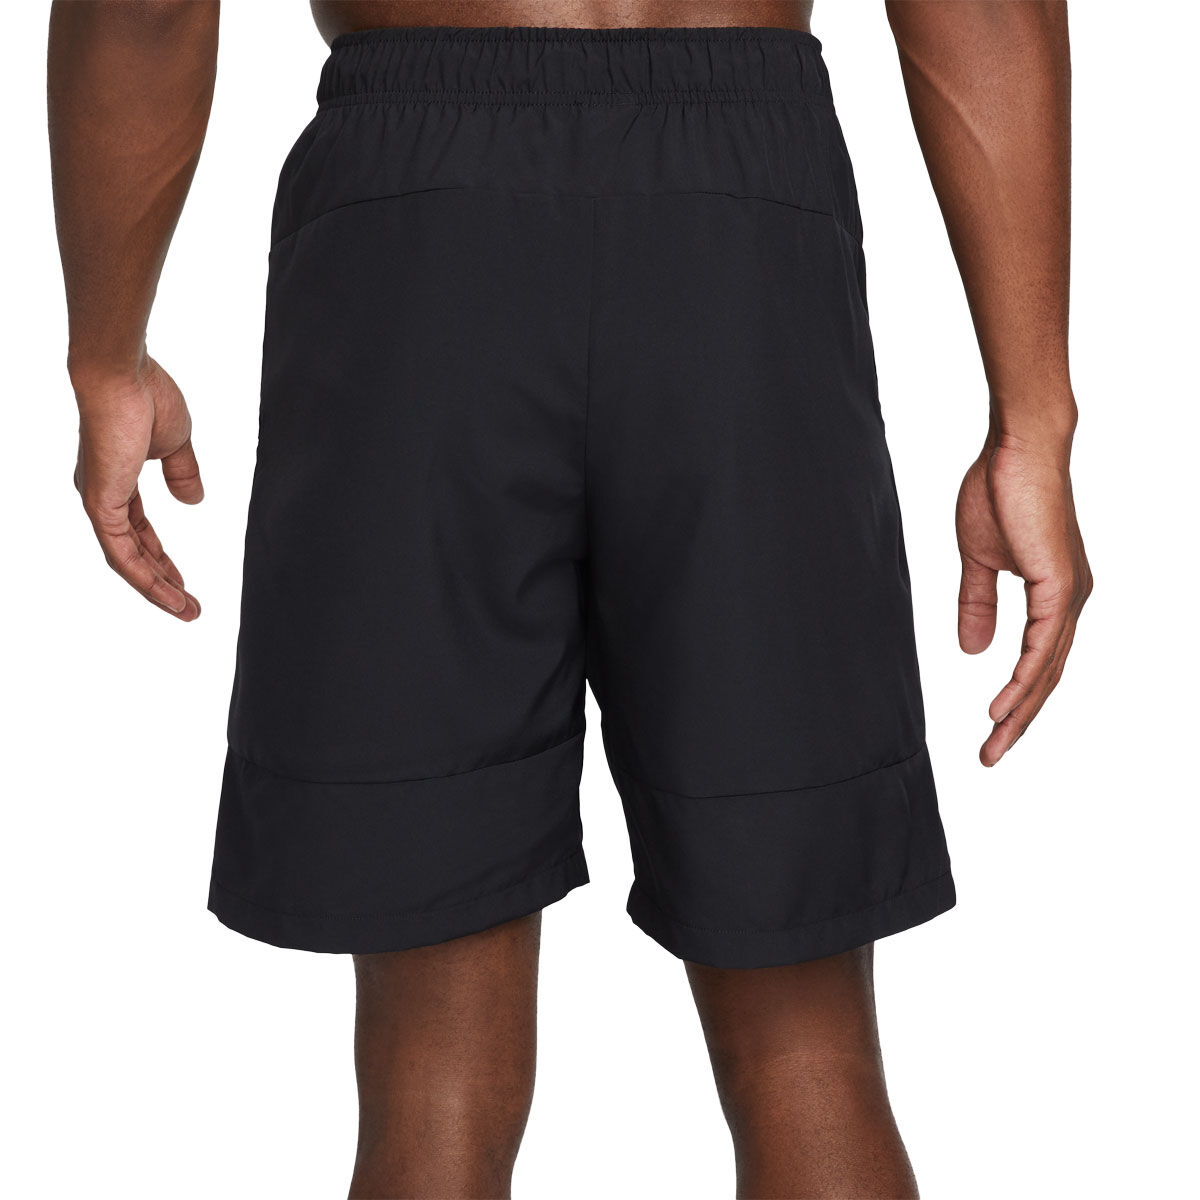 Rotok Mens Workout Running Shorts Quick Dry Athletic Performance Shorts Zip Pockets 